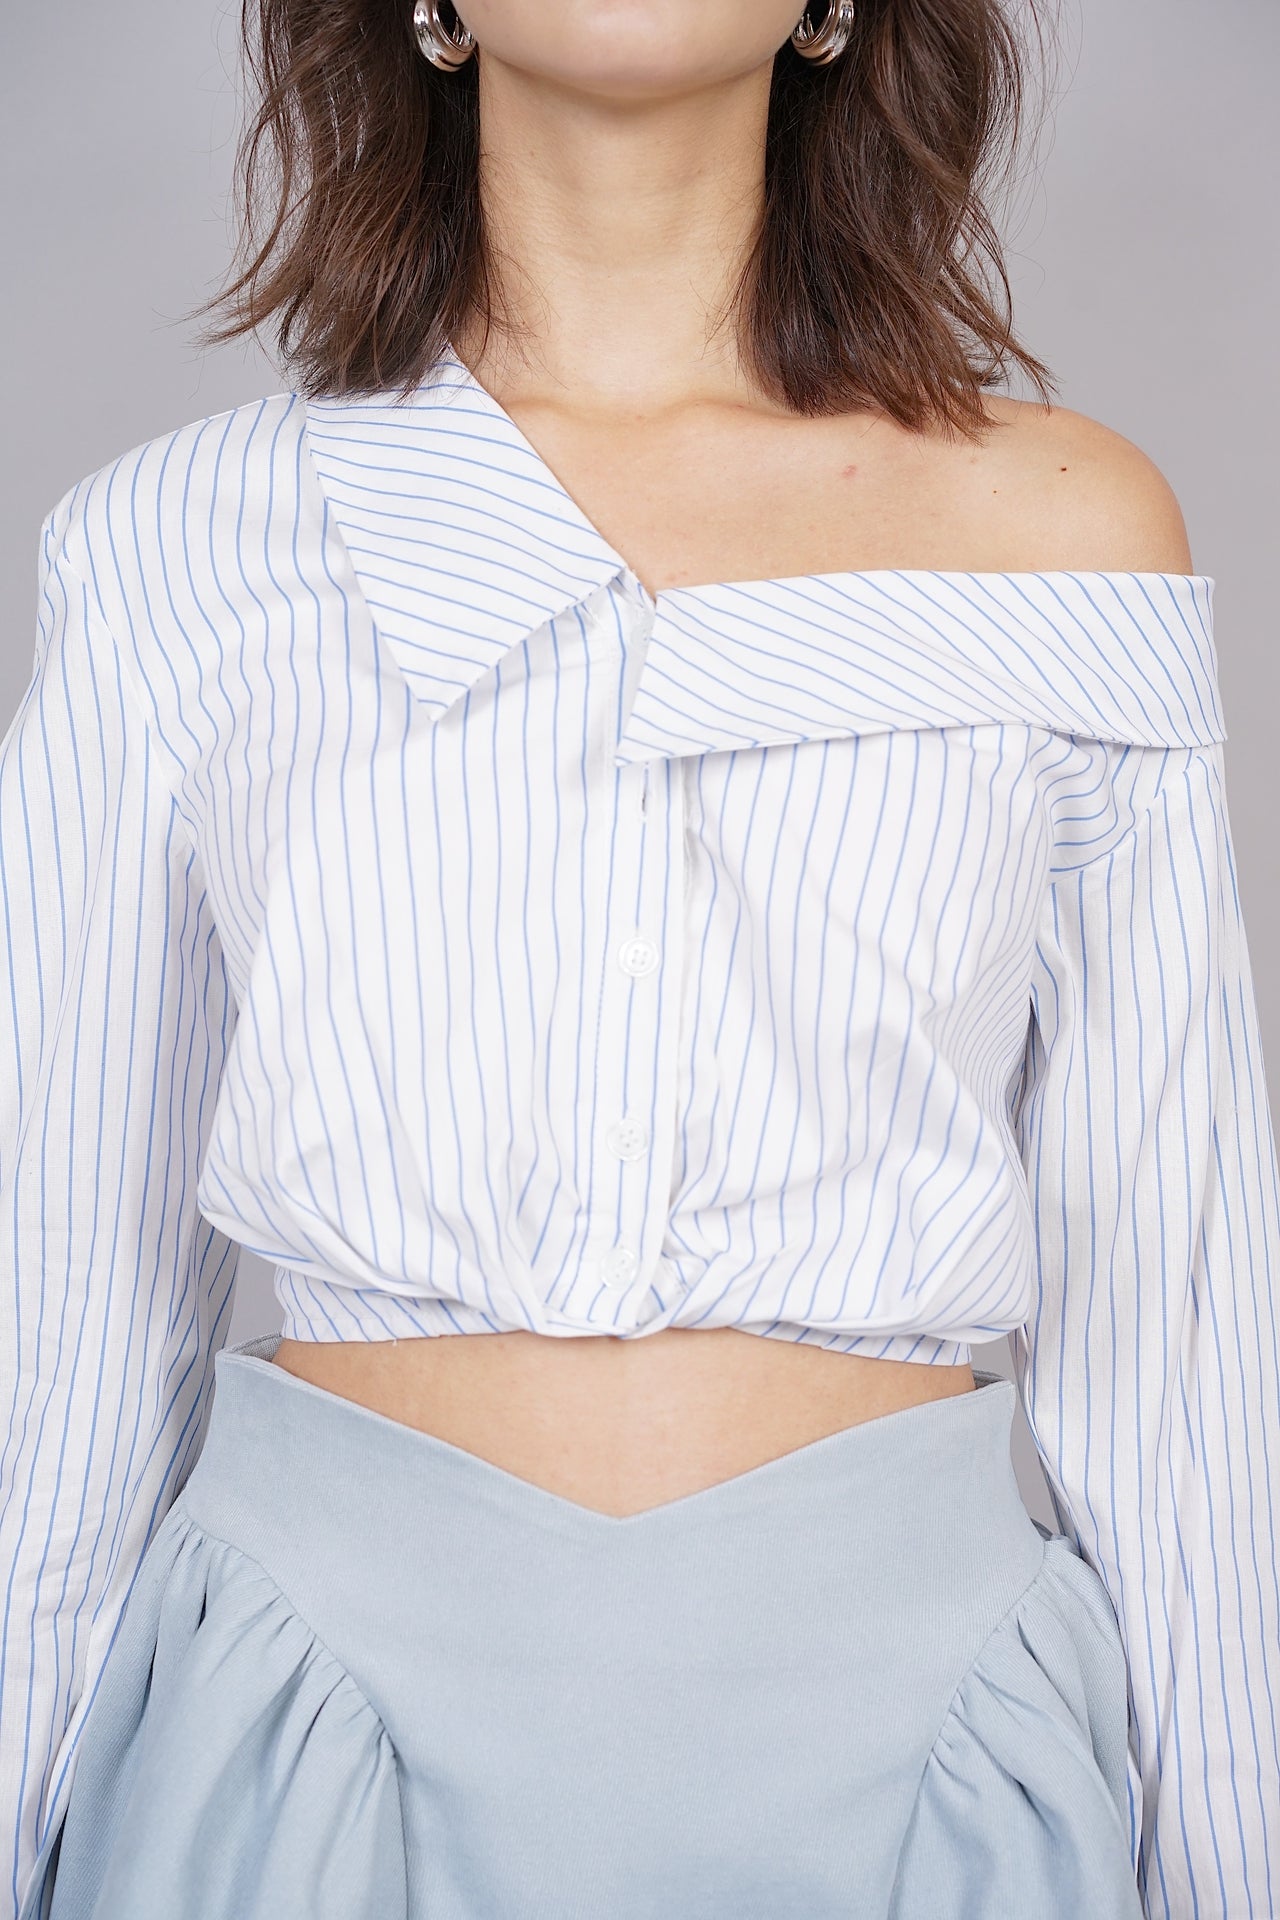 Asymmetrical Cropped Shirt in Light Blue Stripes - Arriving Soon